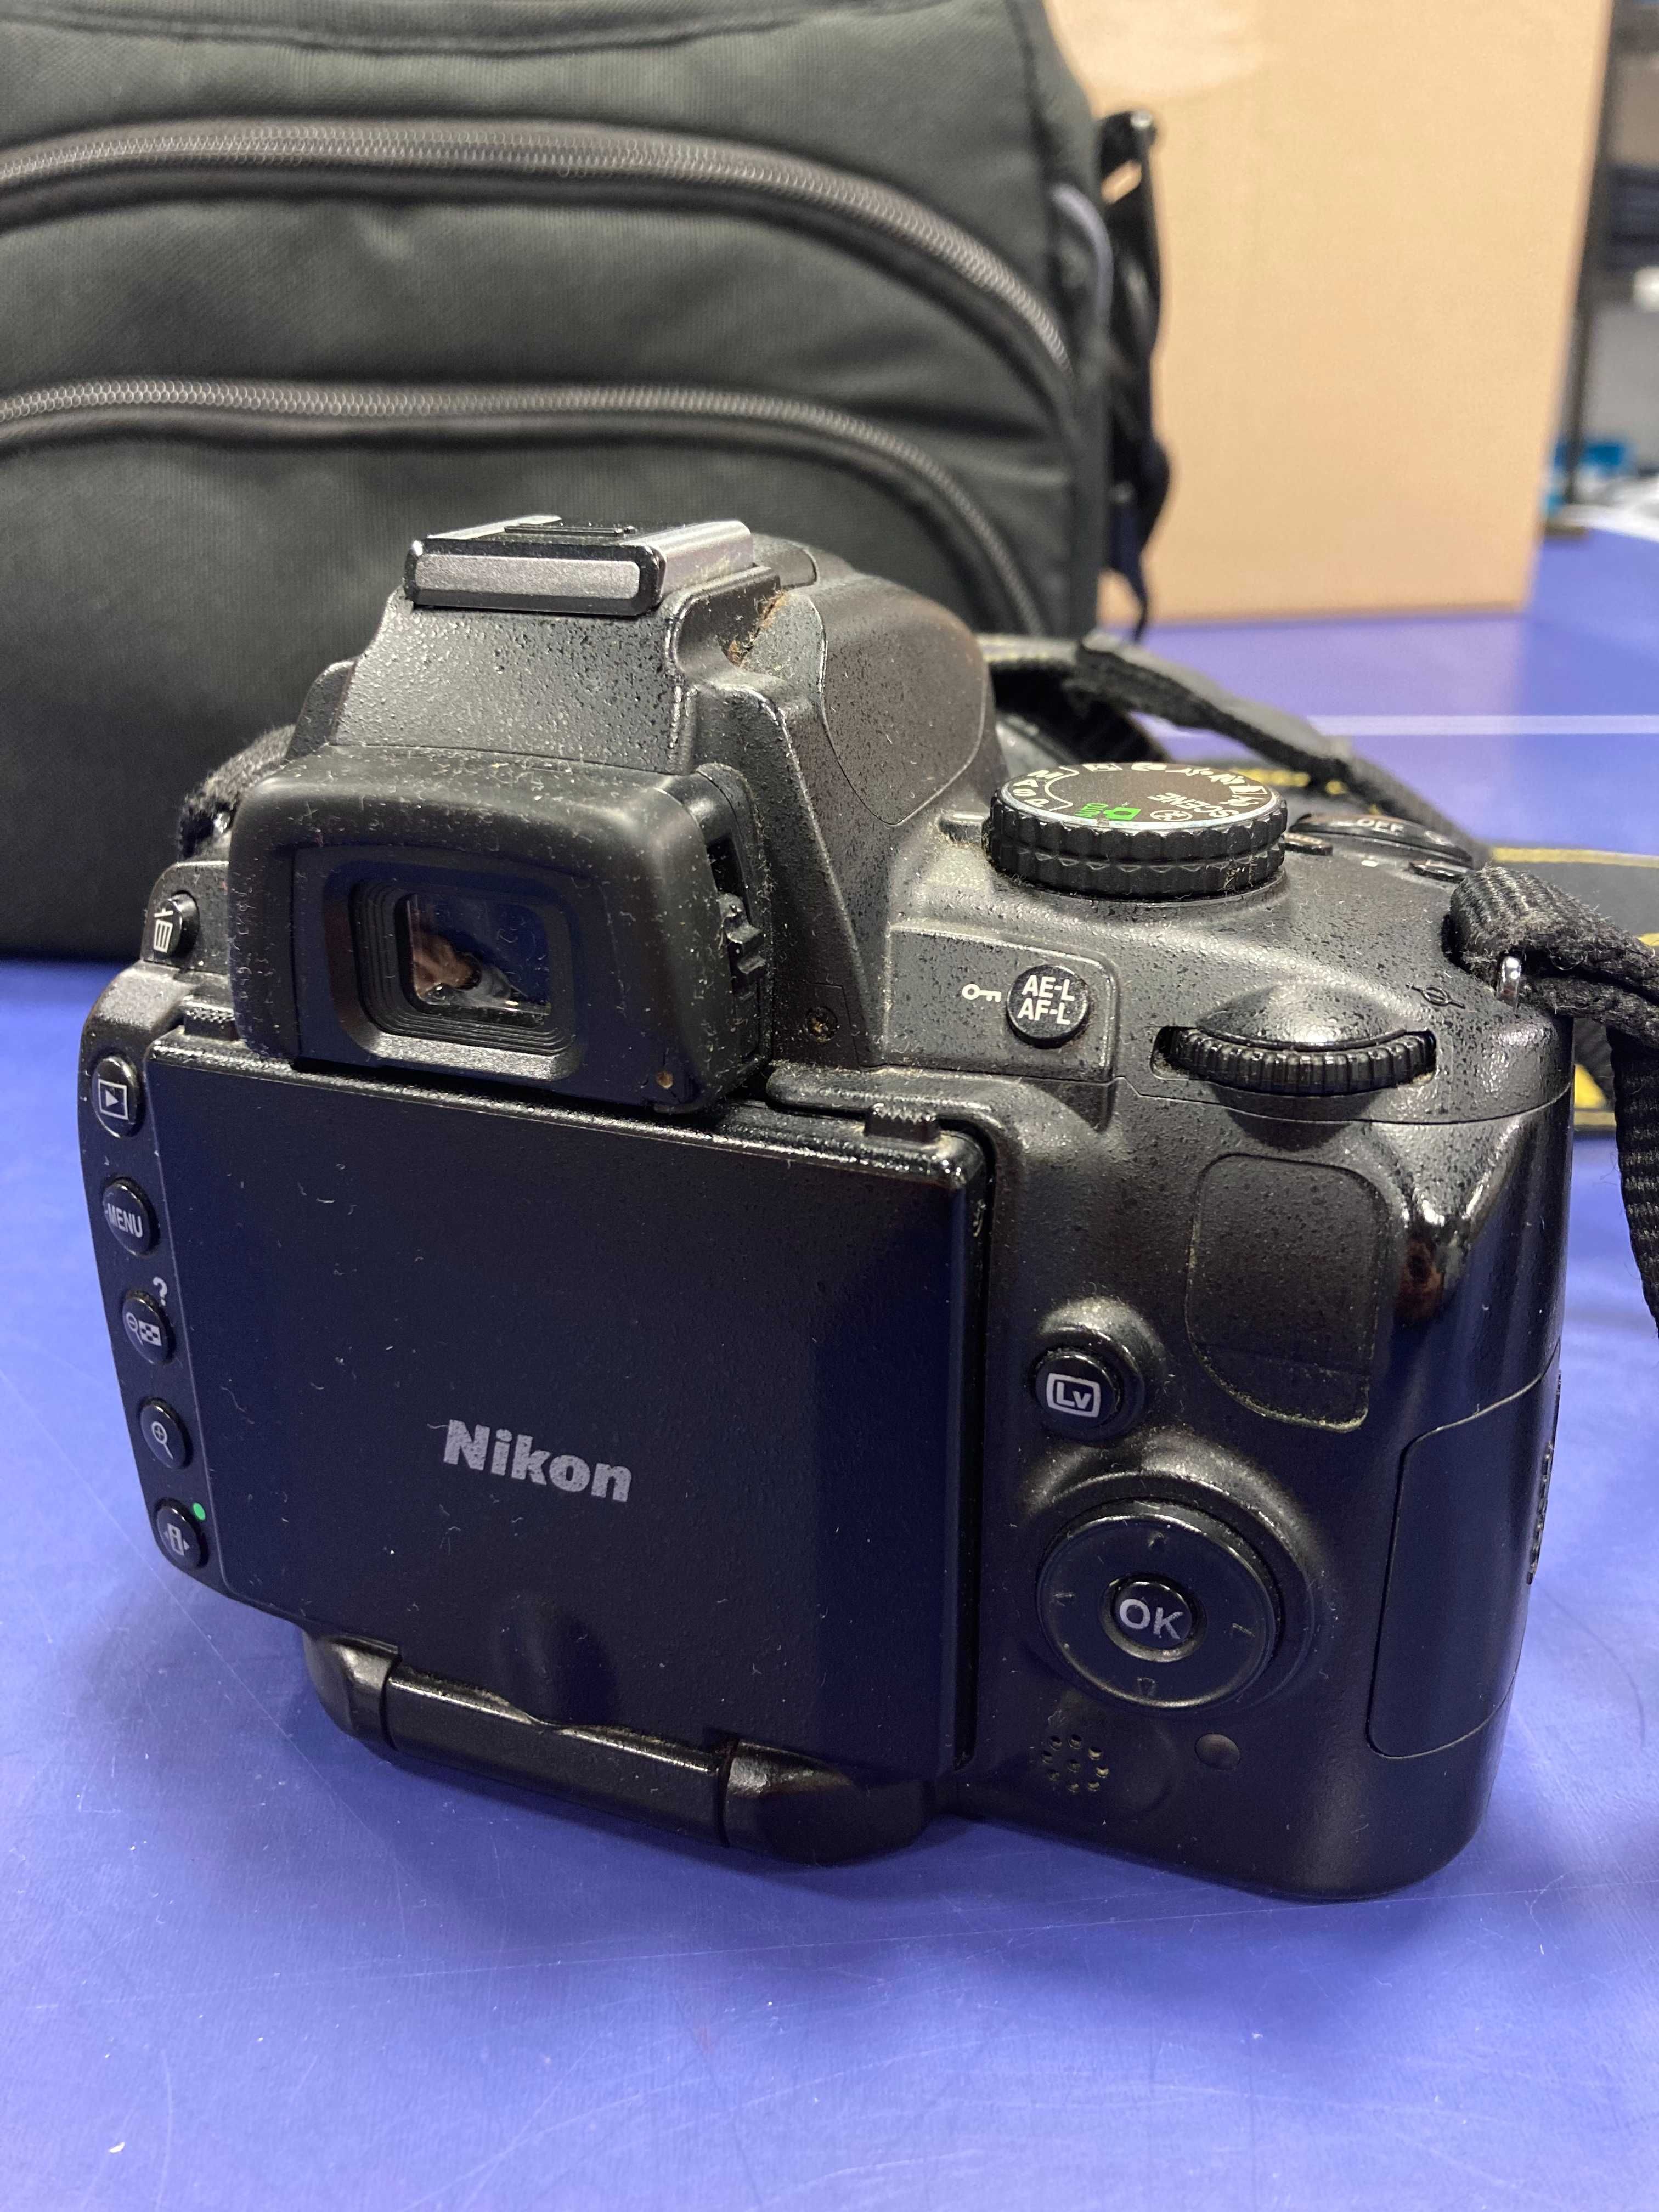 Aparat Nikon D5000 | obiektyw Nikkor 18-55, torba